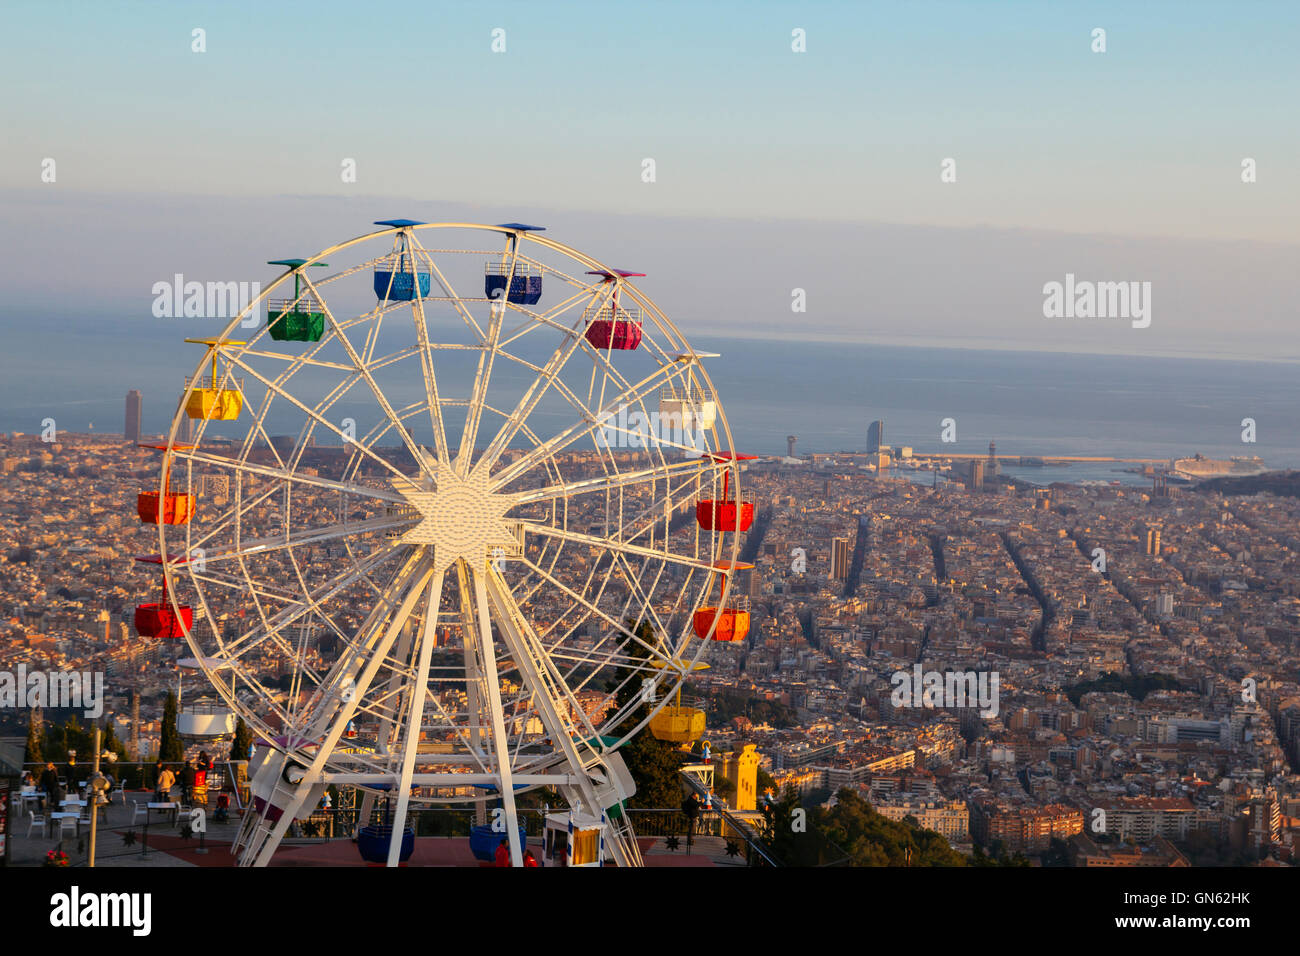 Ferris wheel on top of the city, at Tibidabo, Barcelona Stock Photo